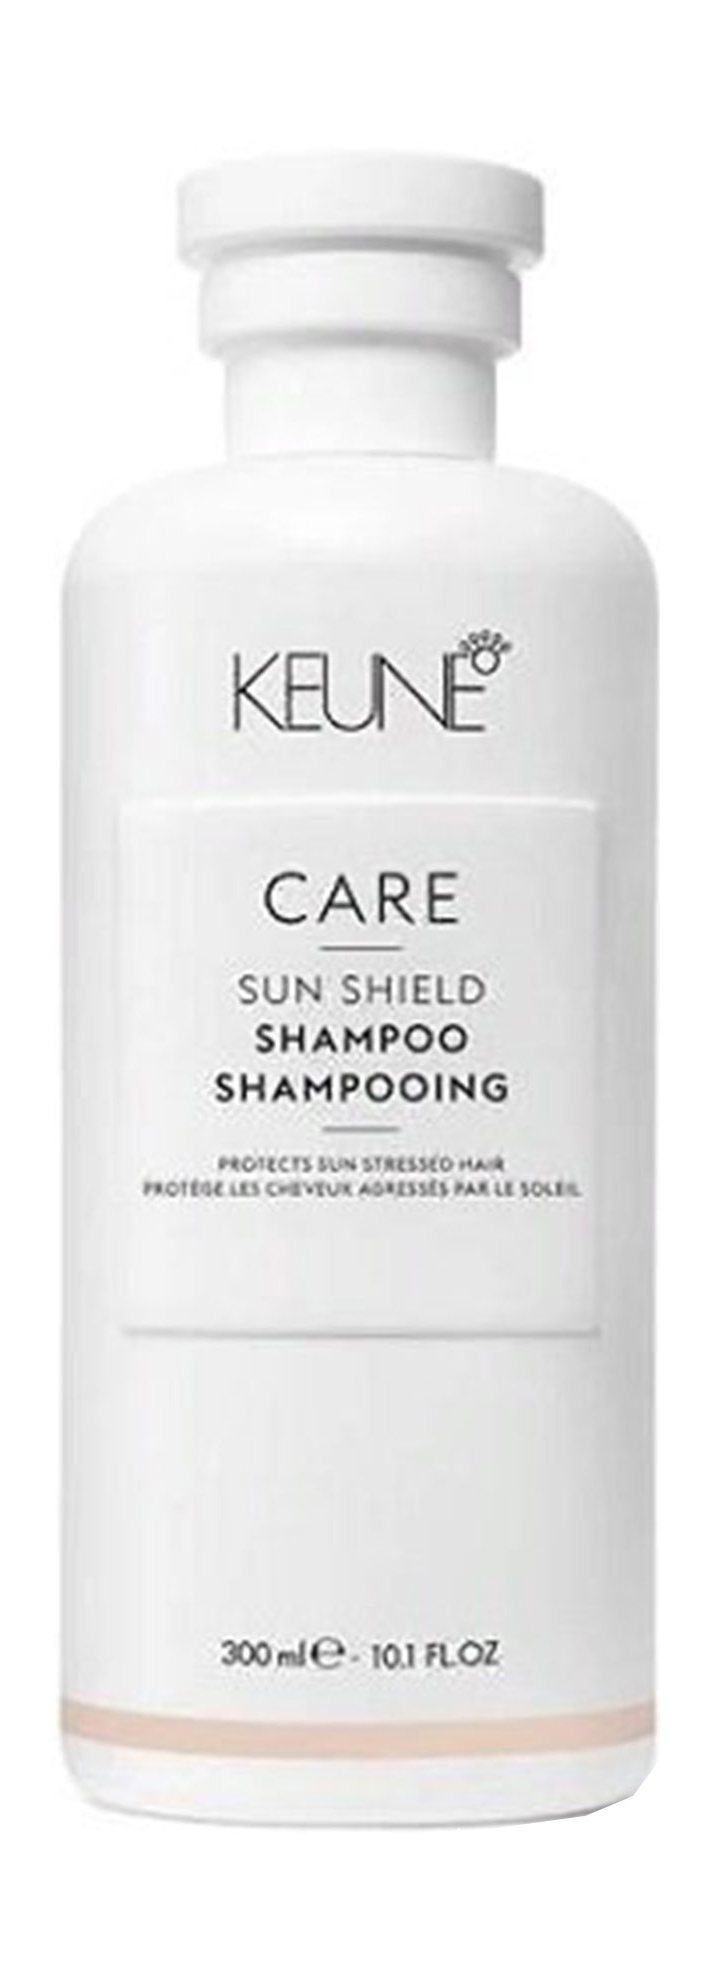 Шампунь Keune Care Sun Shield Shampoo Солнечная Линия, 80 мл